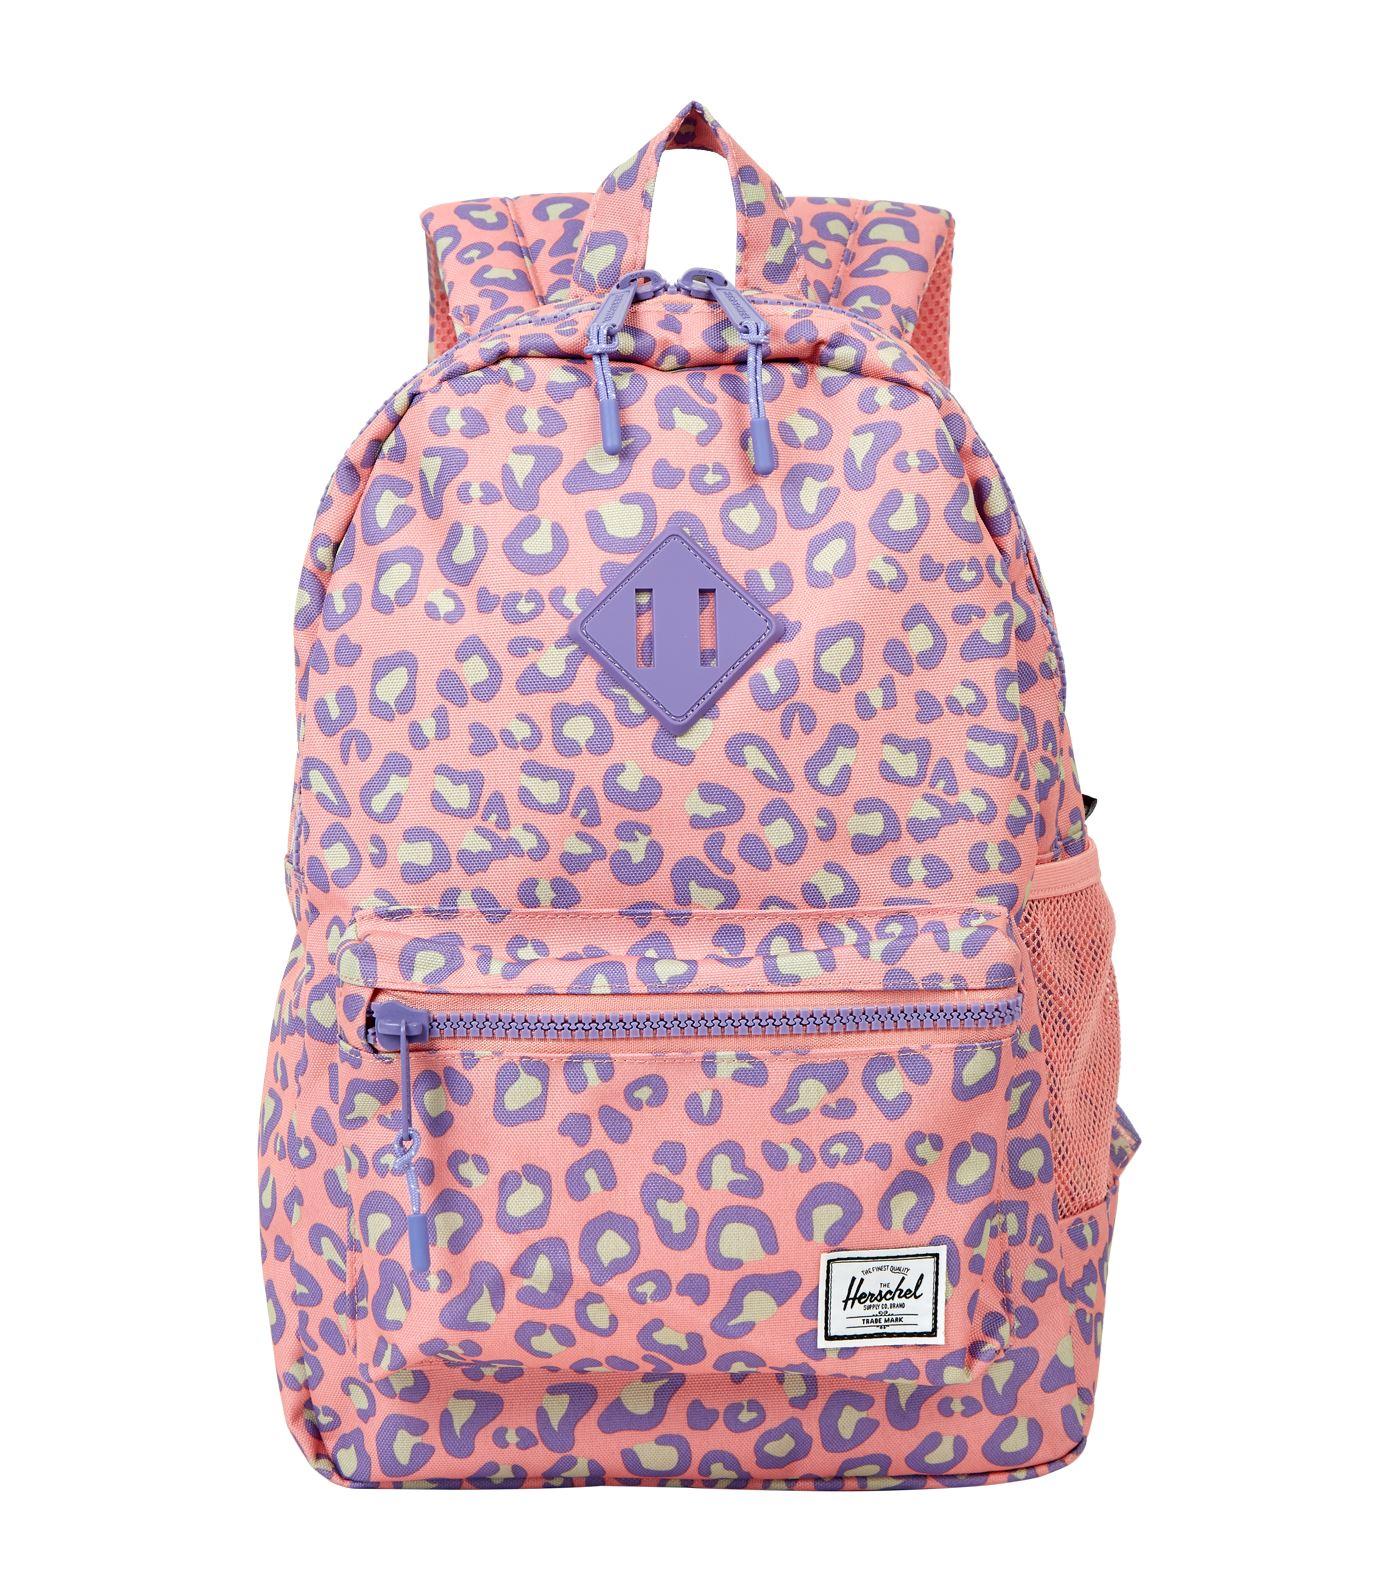 Herschel Supply Co. Heritage Leopard Print Backpack in Animal Print (Pink)  - Lyst